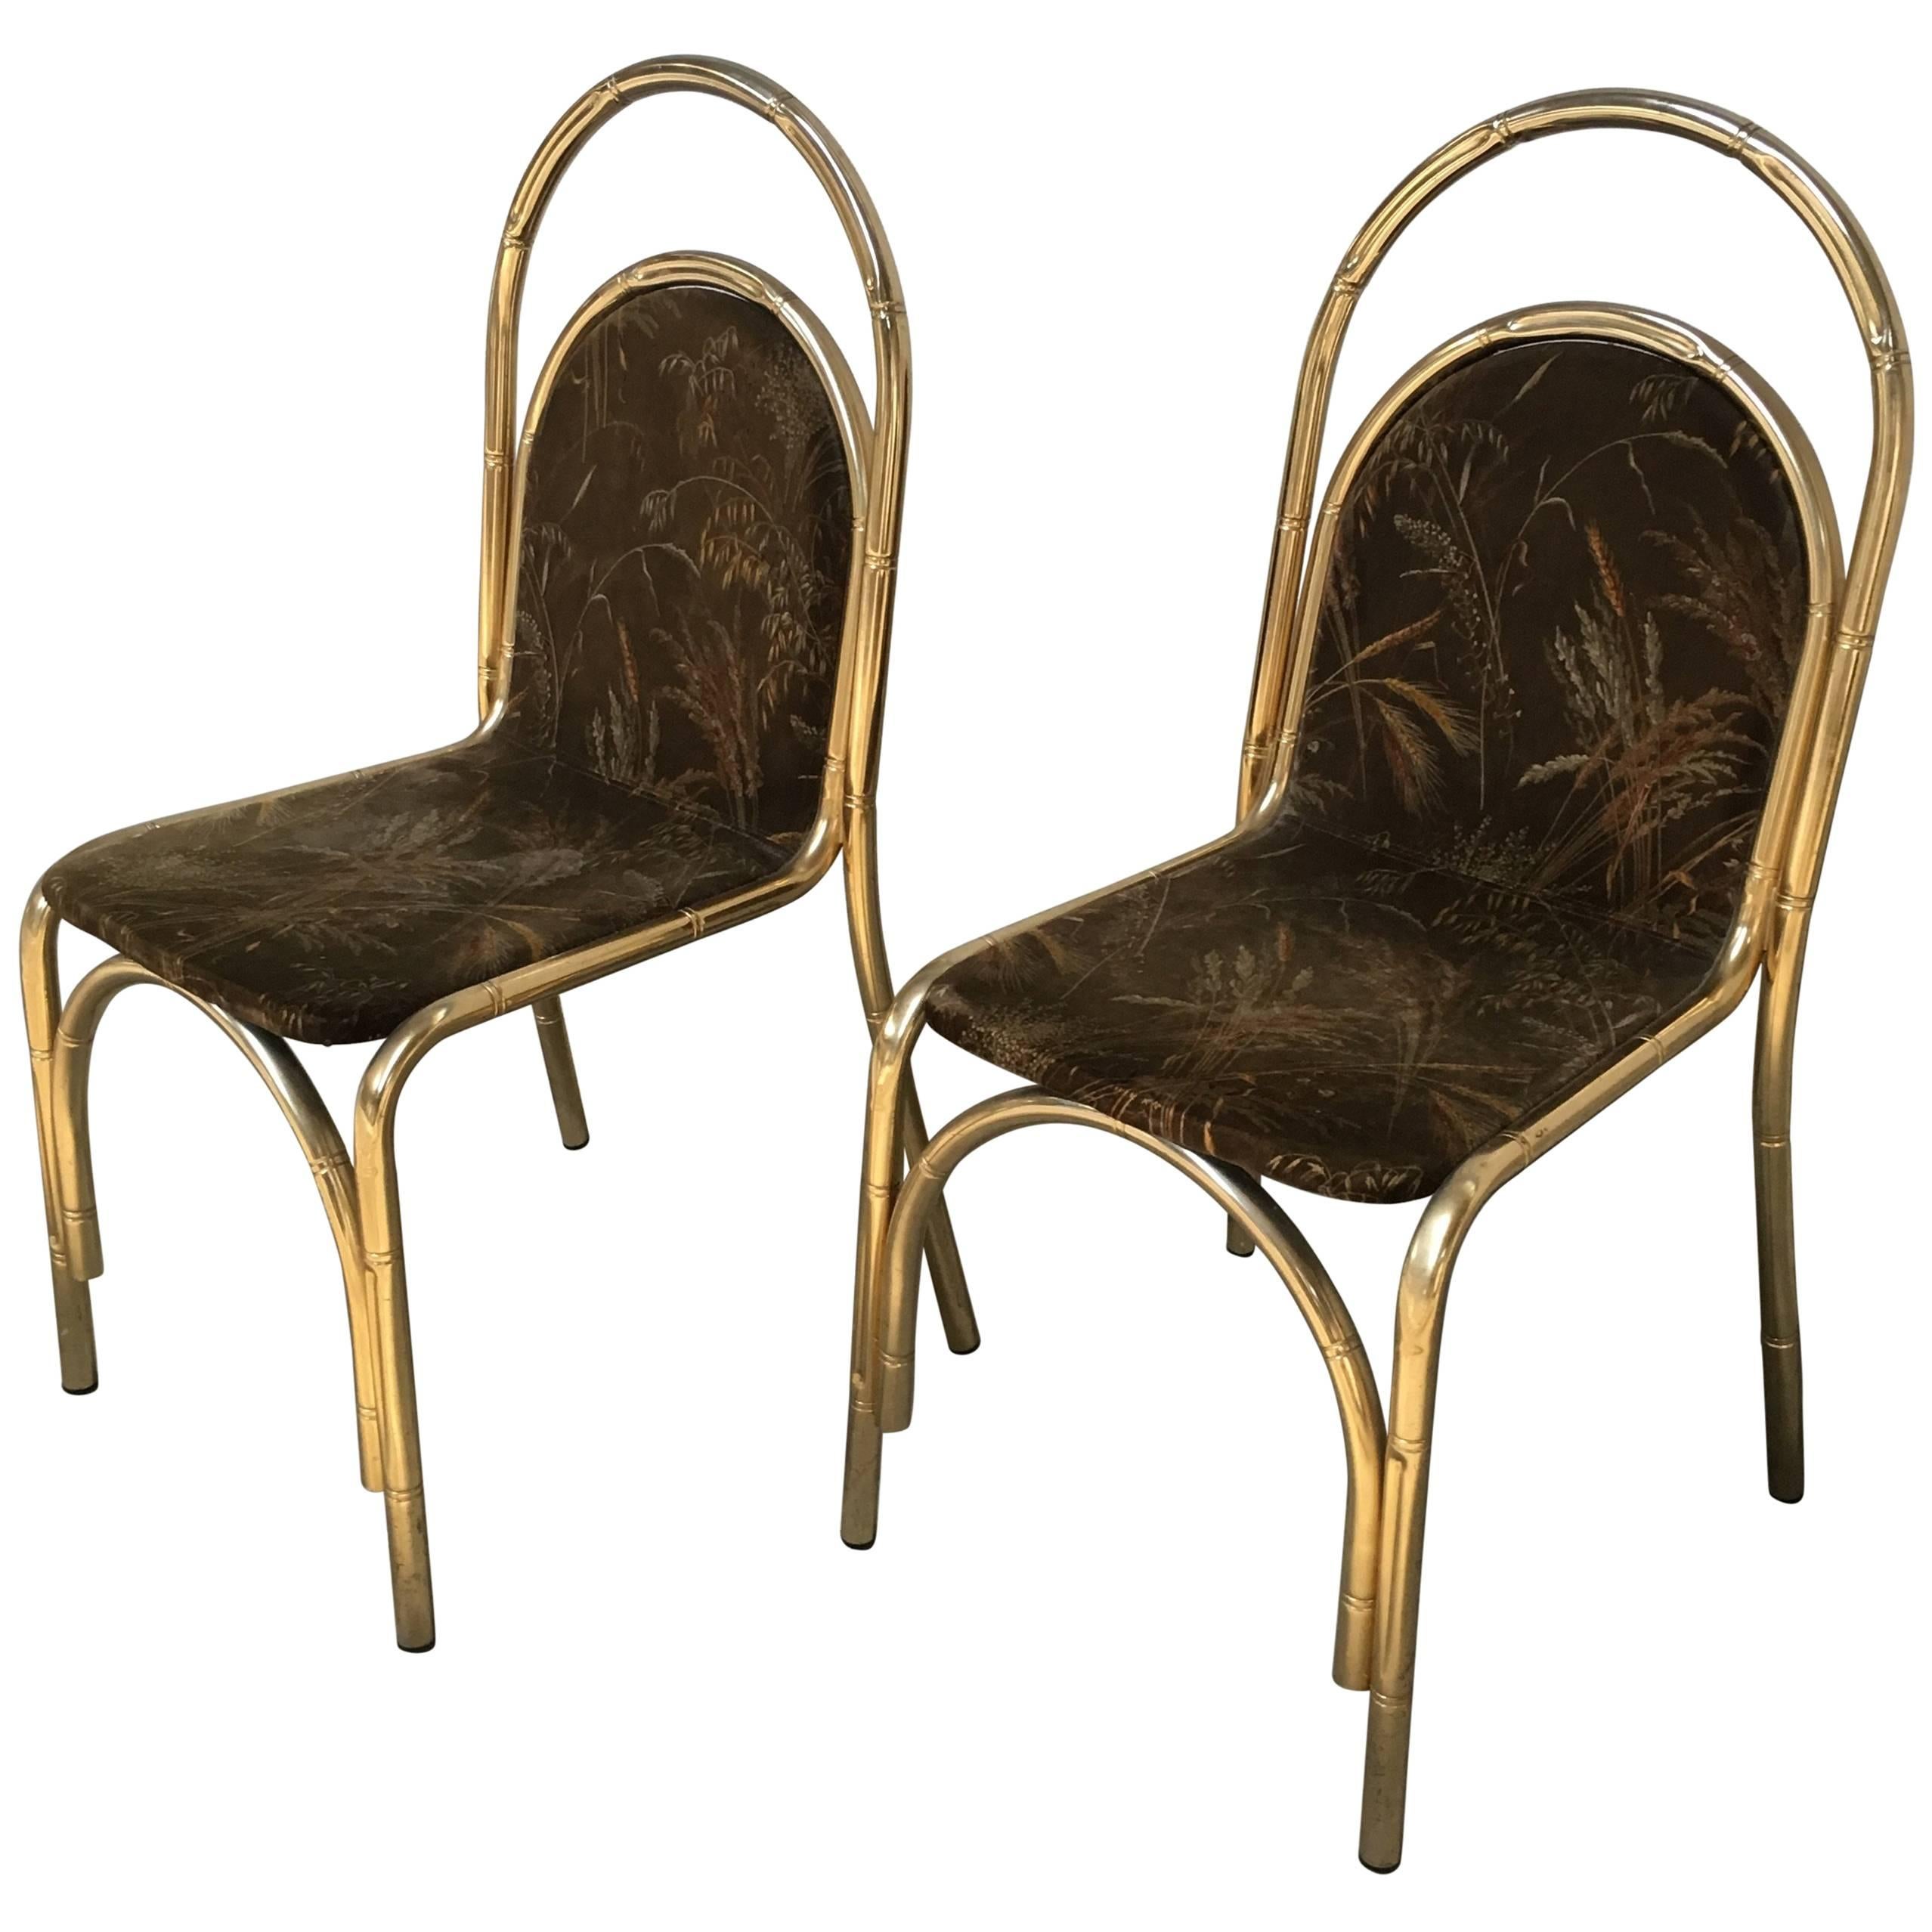 Mid-Century Modern Italian Gilt Metal Faux Bamboo Chairs with Original Fabric